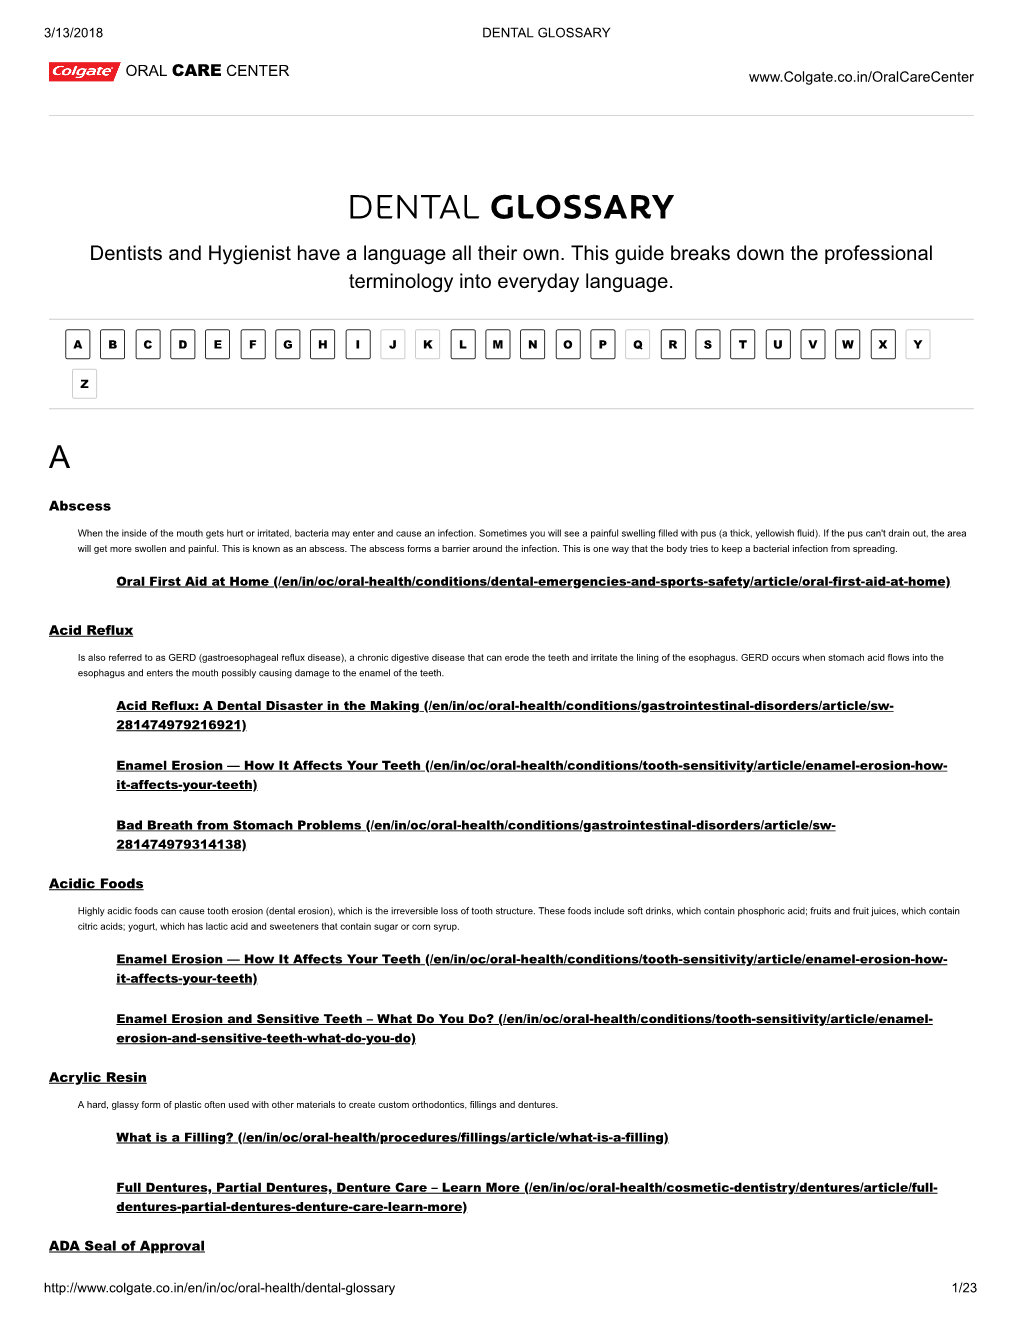 Dental Glossary